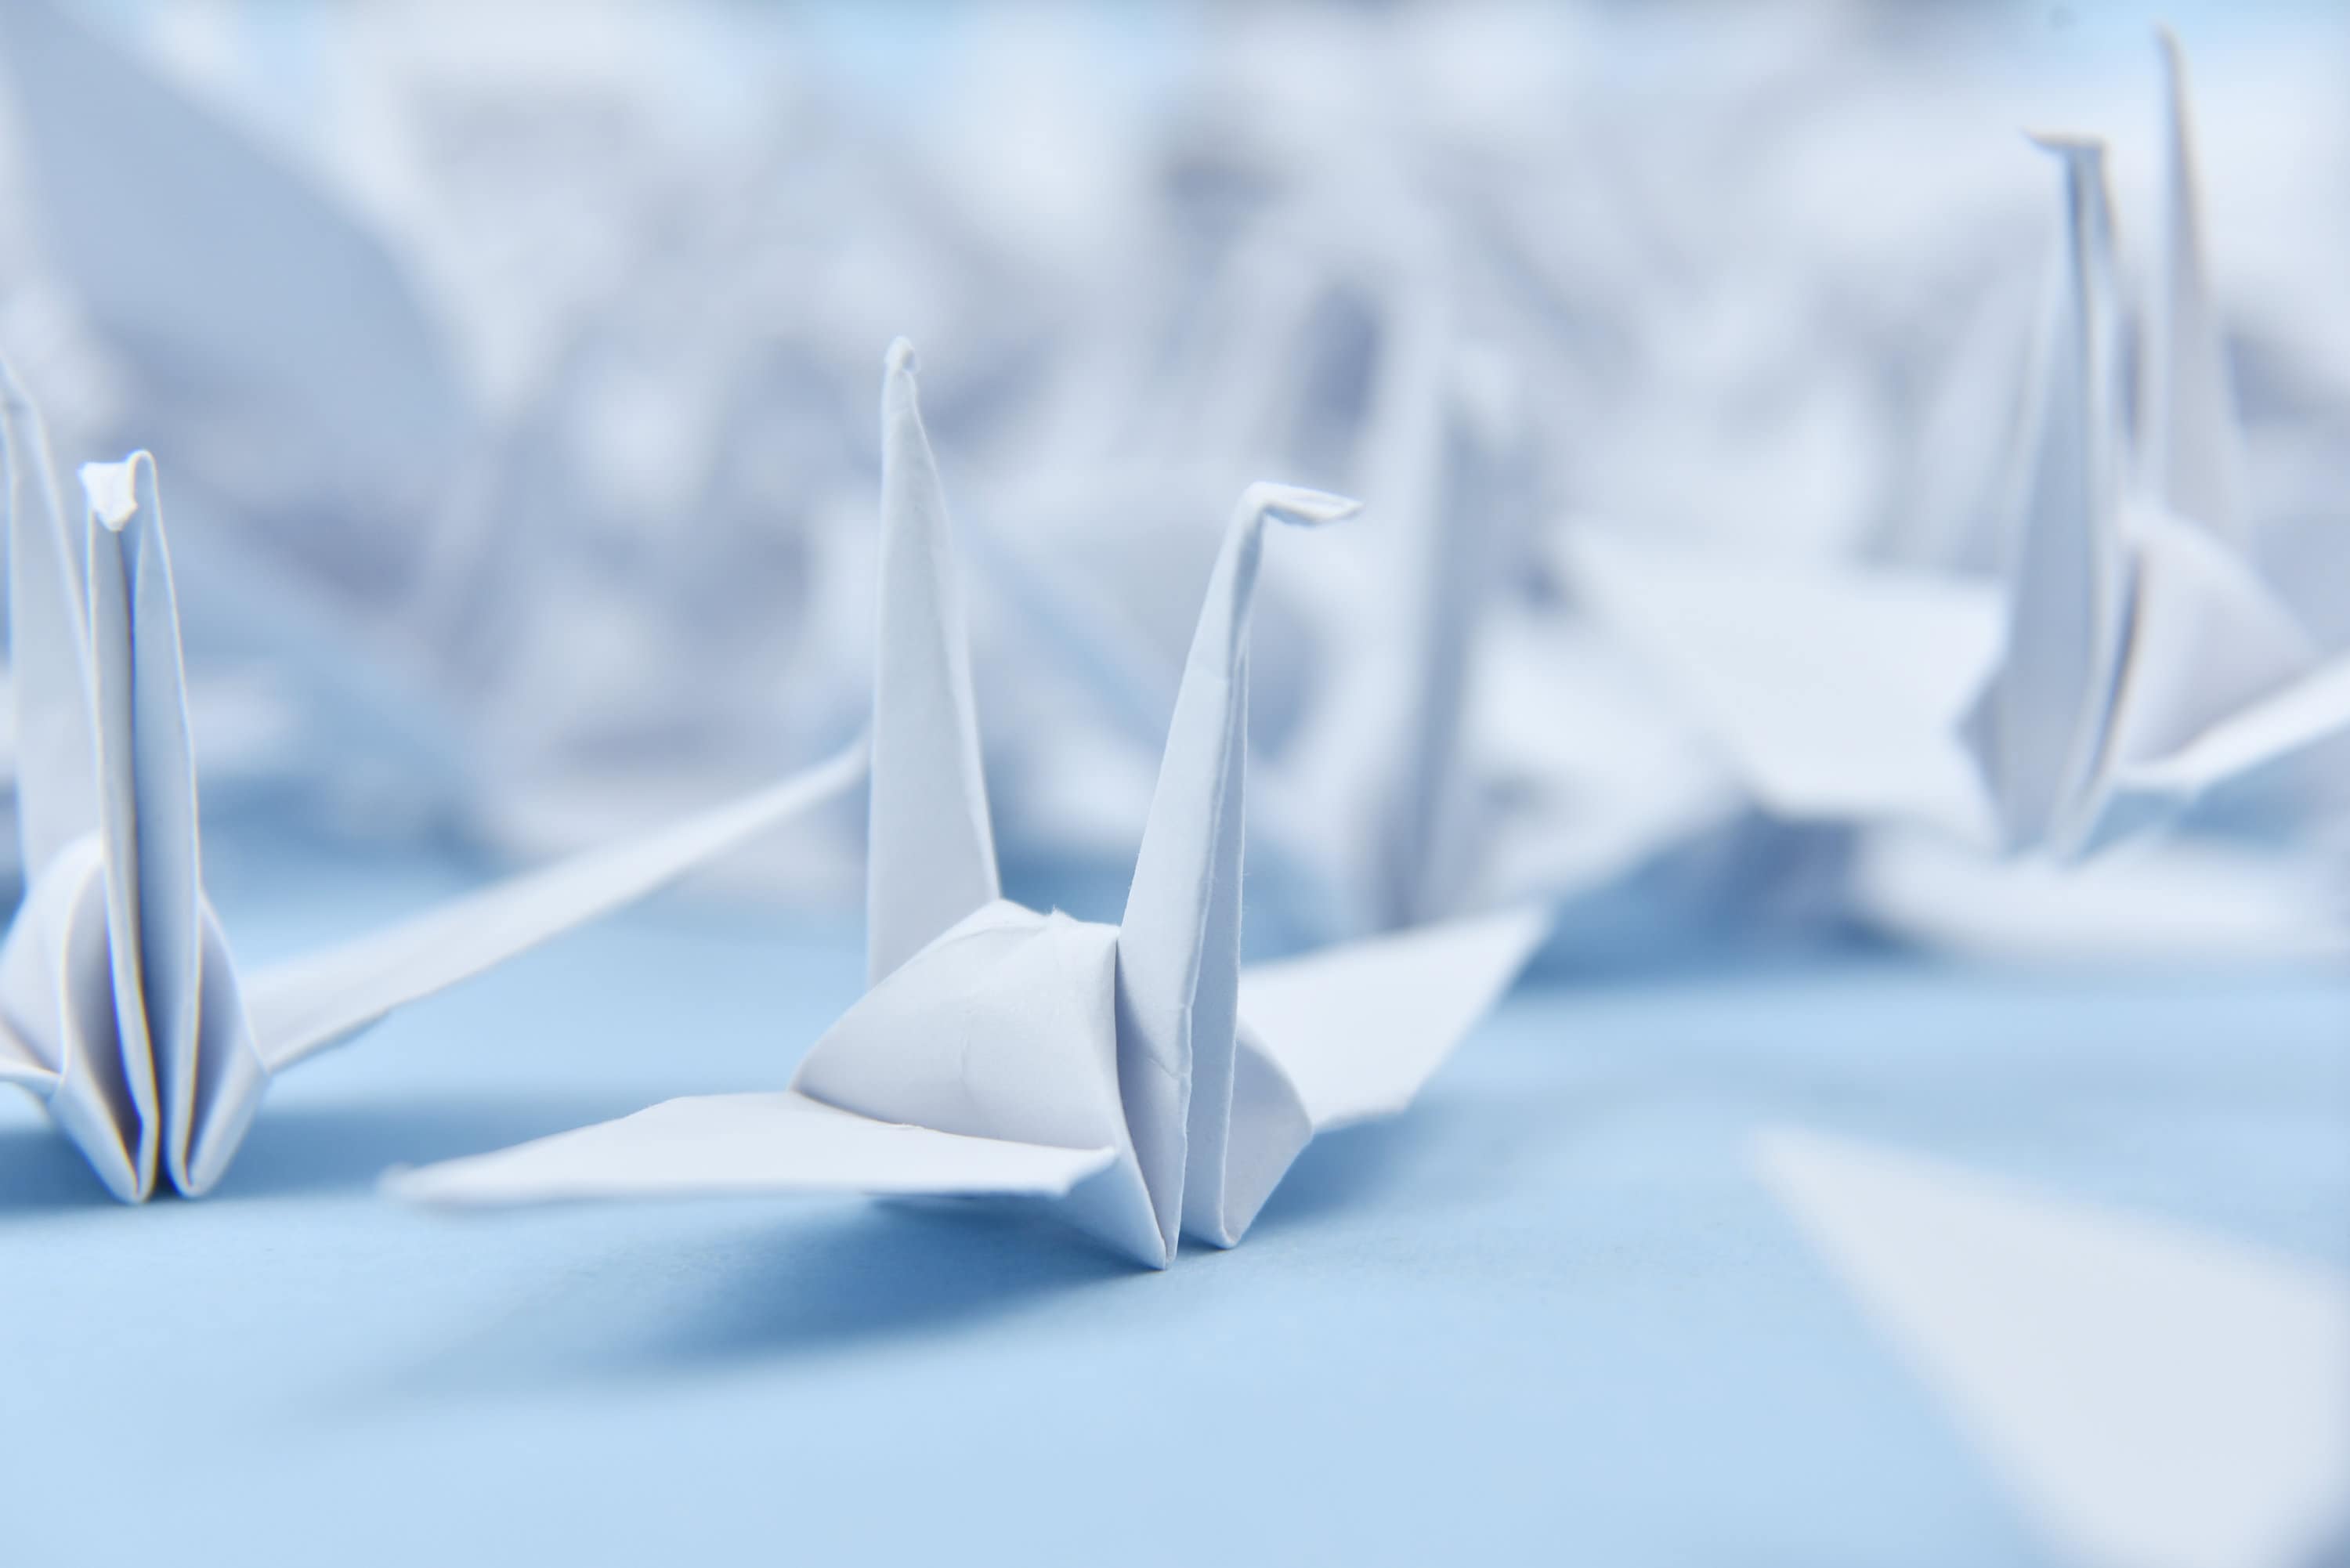 1000 White Origami Crane 3x3 inches (7.5 cm) for Decoration, Ornament, Wedding Gift